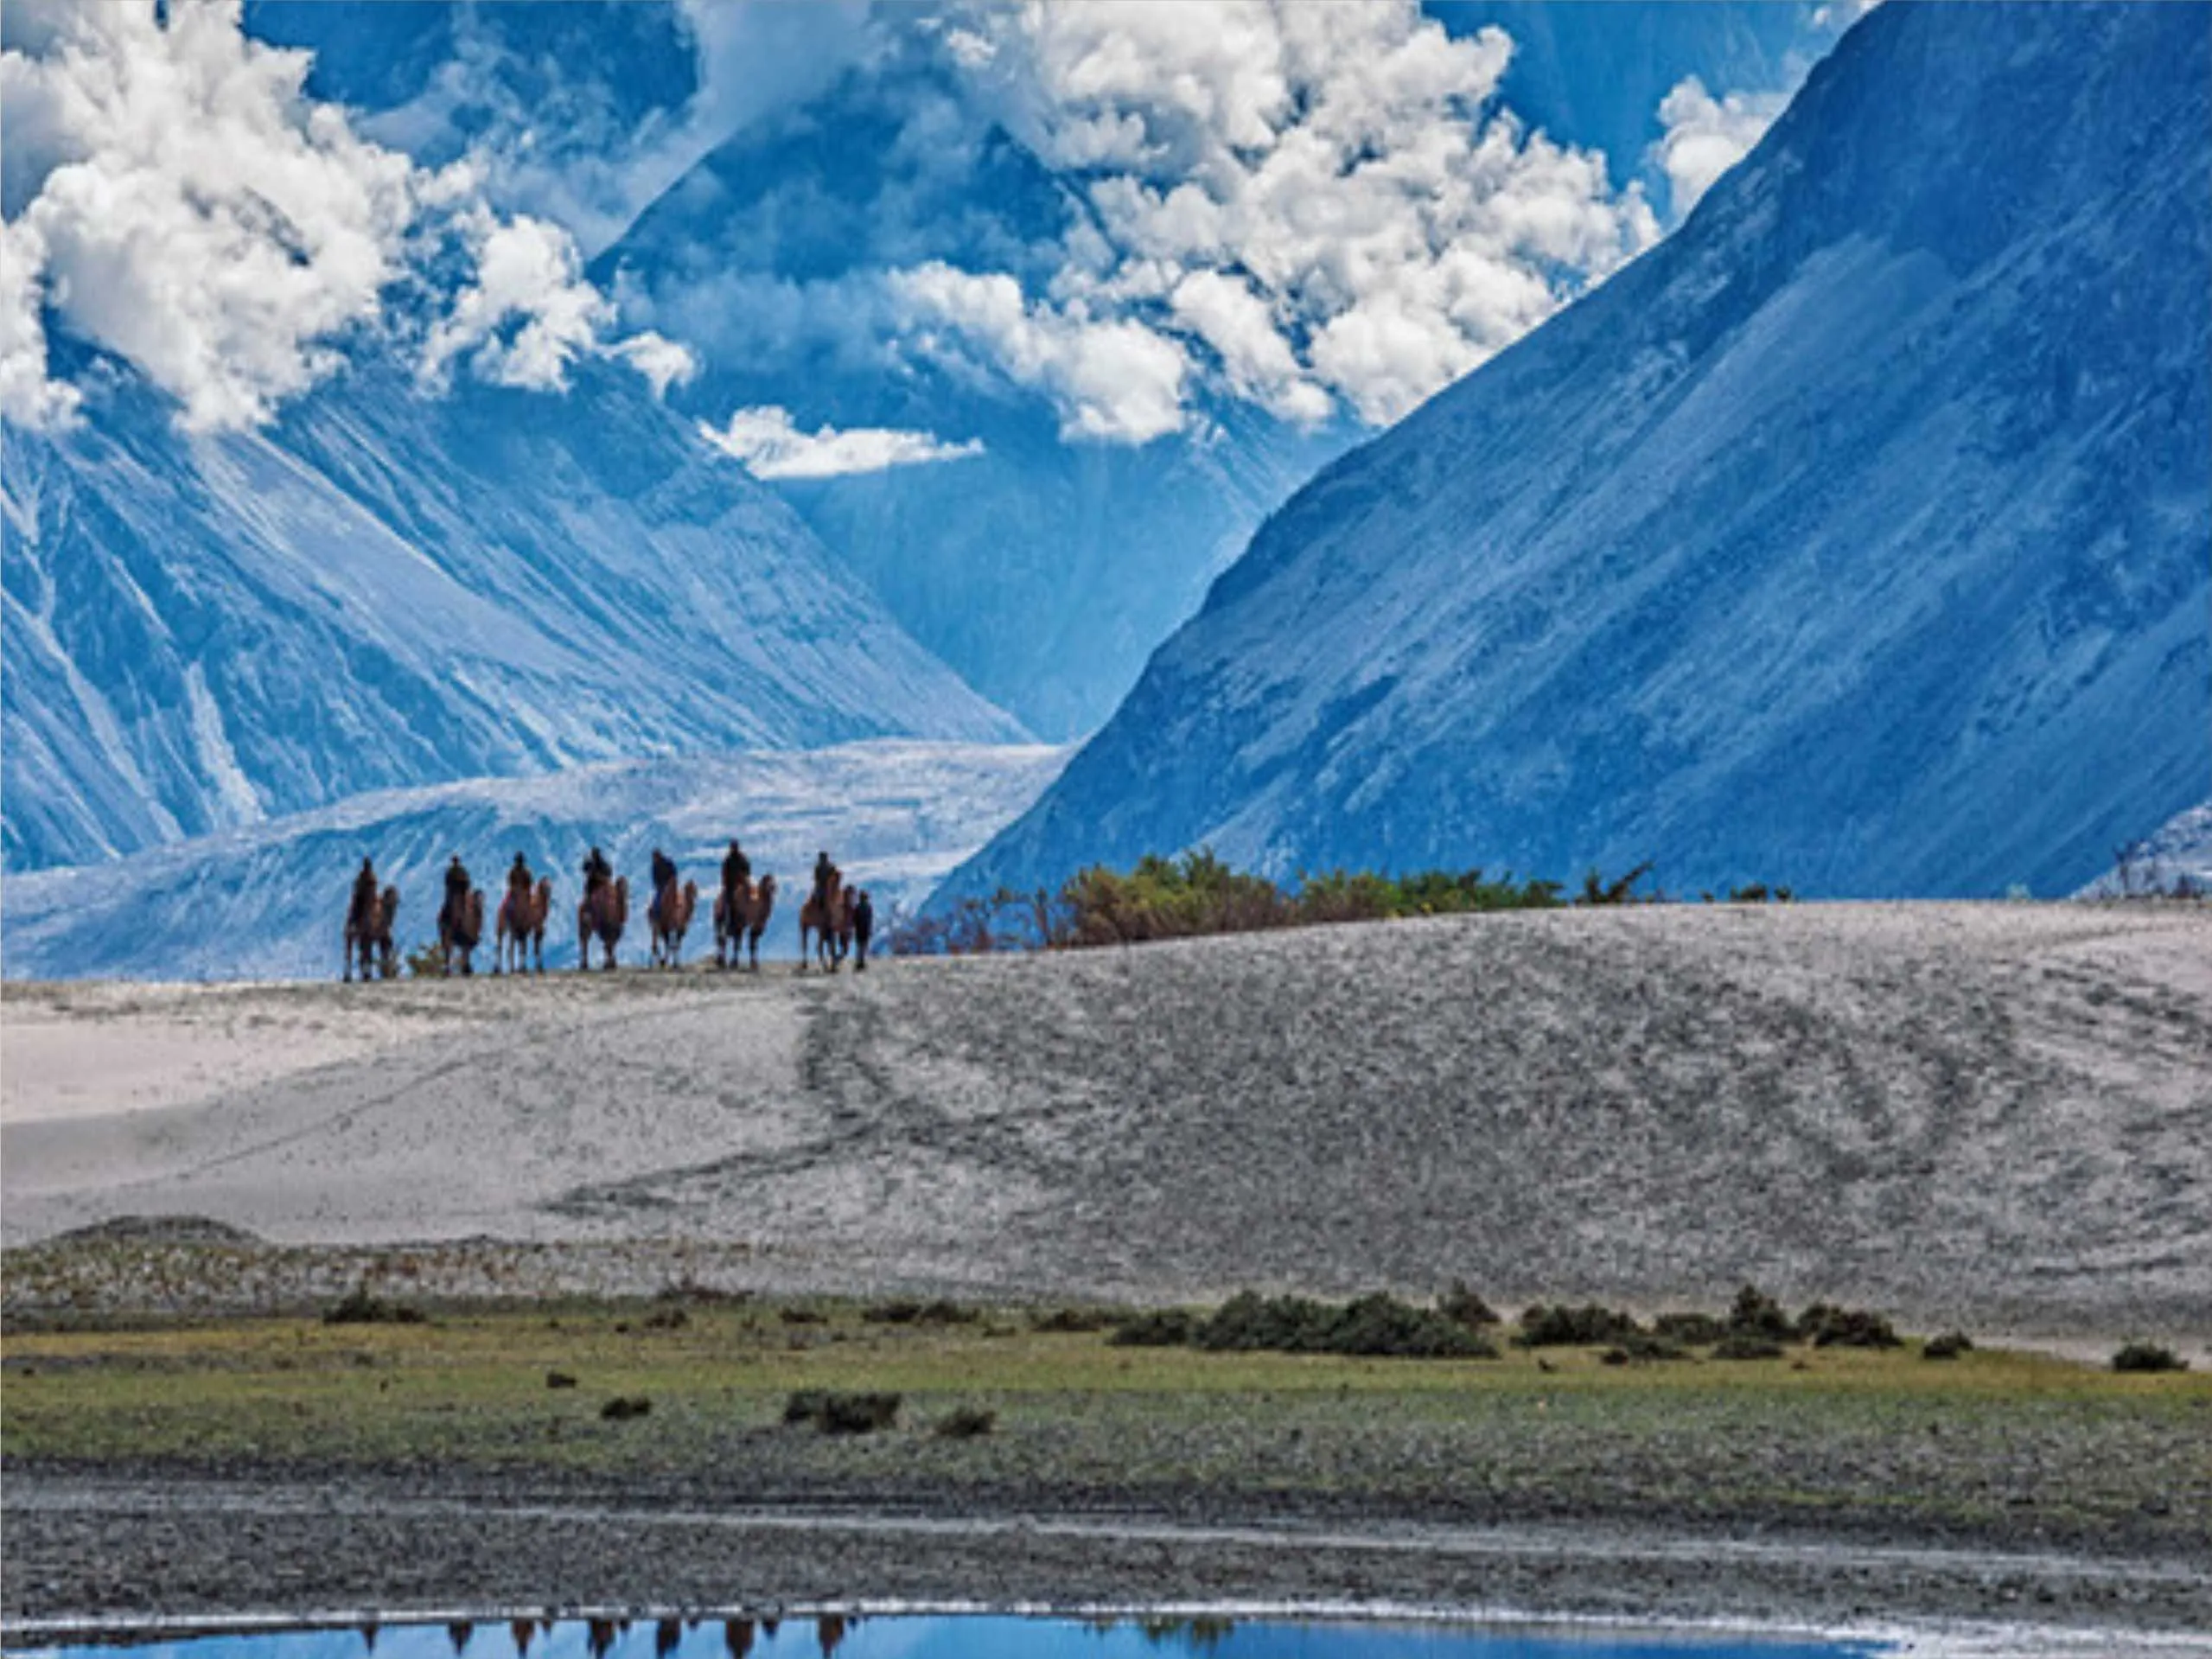 View of Ladakh